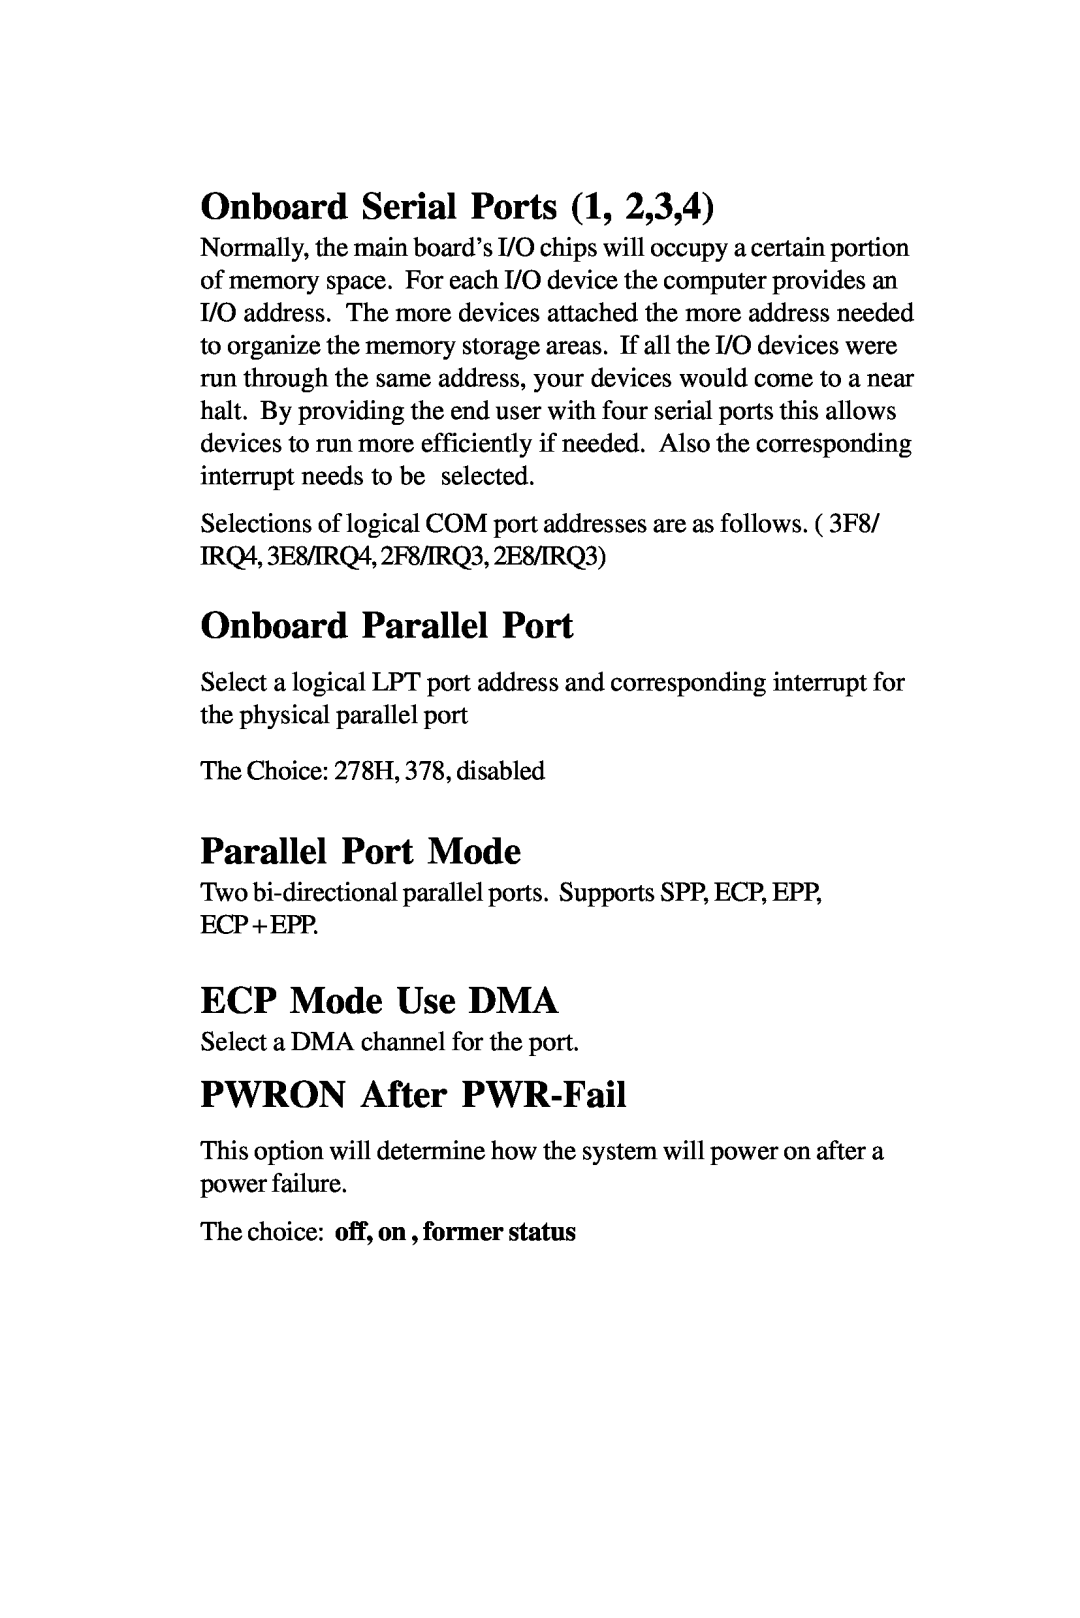 Intel PCM-6896 manual Onboard Serial Ports 1, 2,3,4, Onboard Parallel Port, Parallel Port Mode, ECP Mode Use DMA 